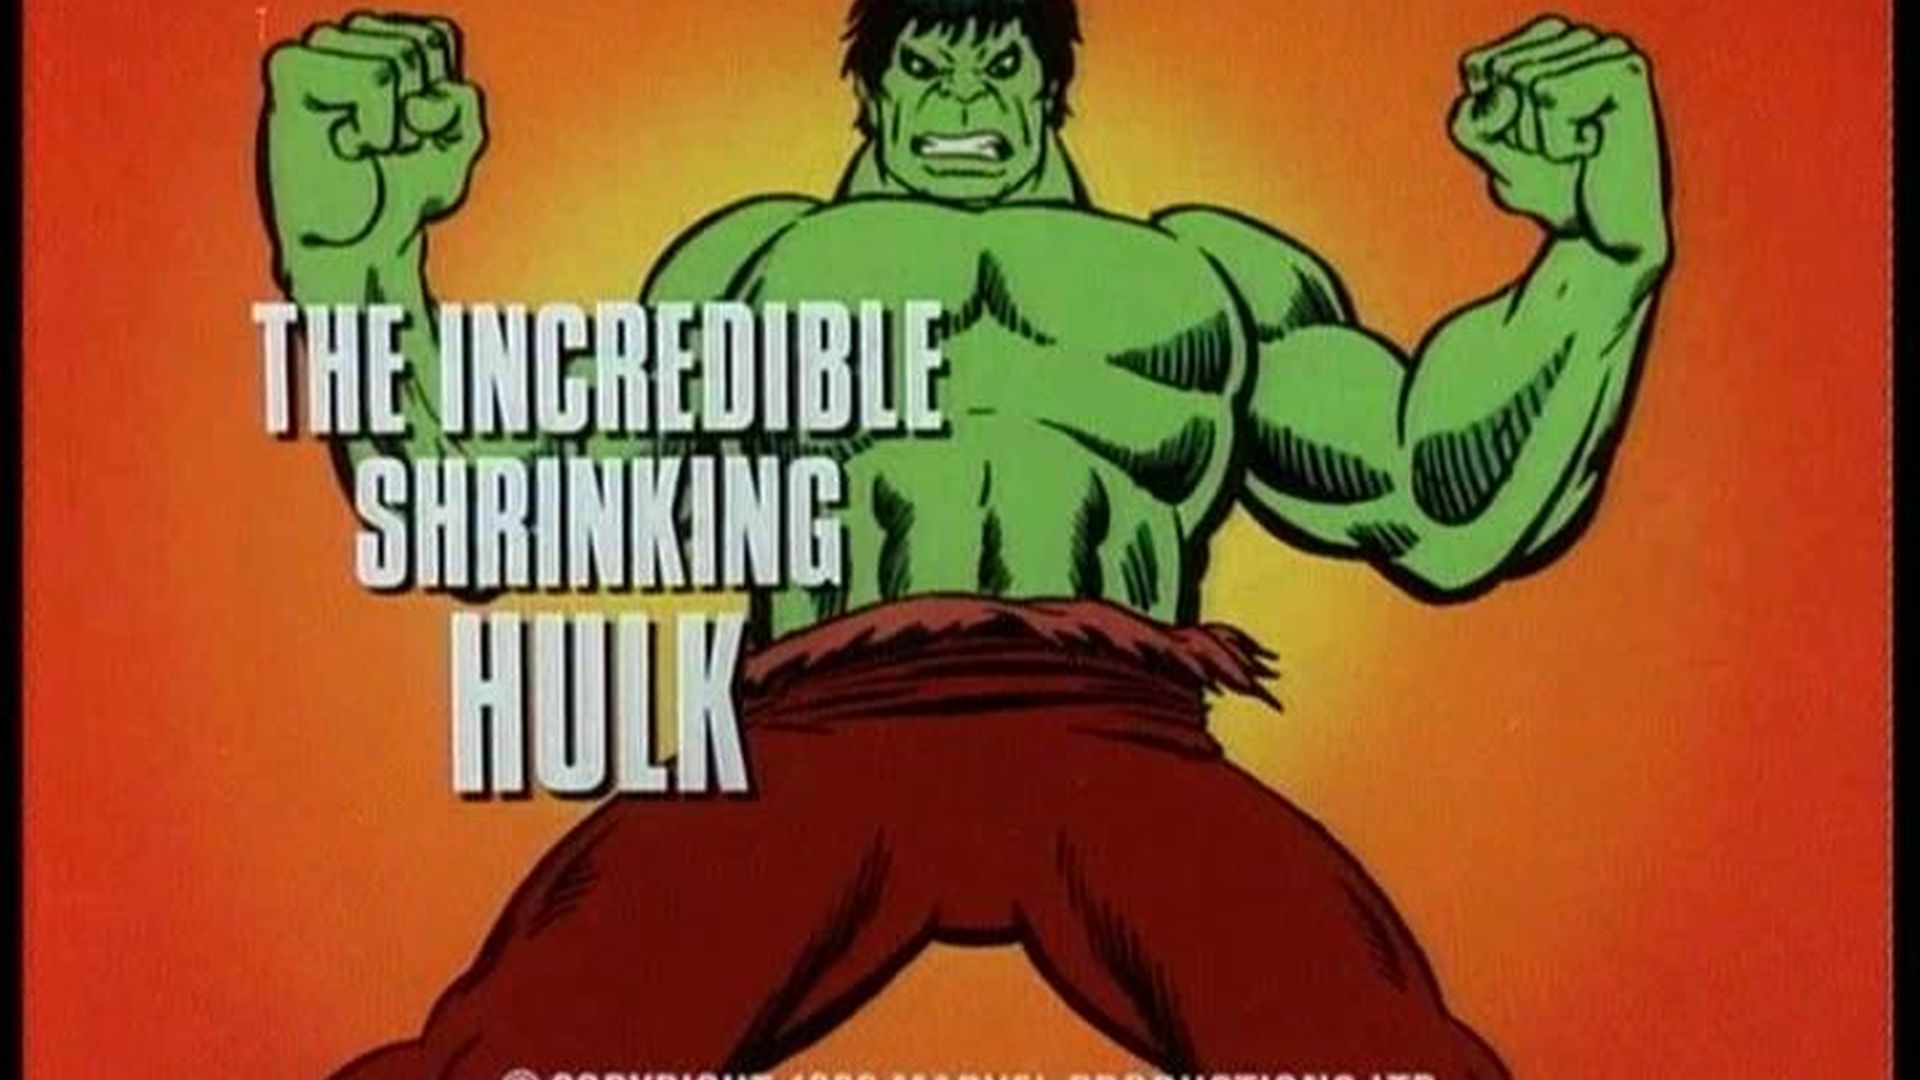 The Incredible Hulk background